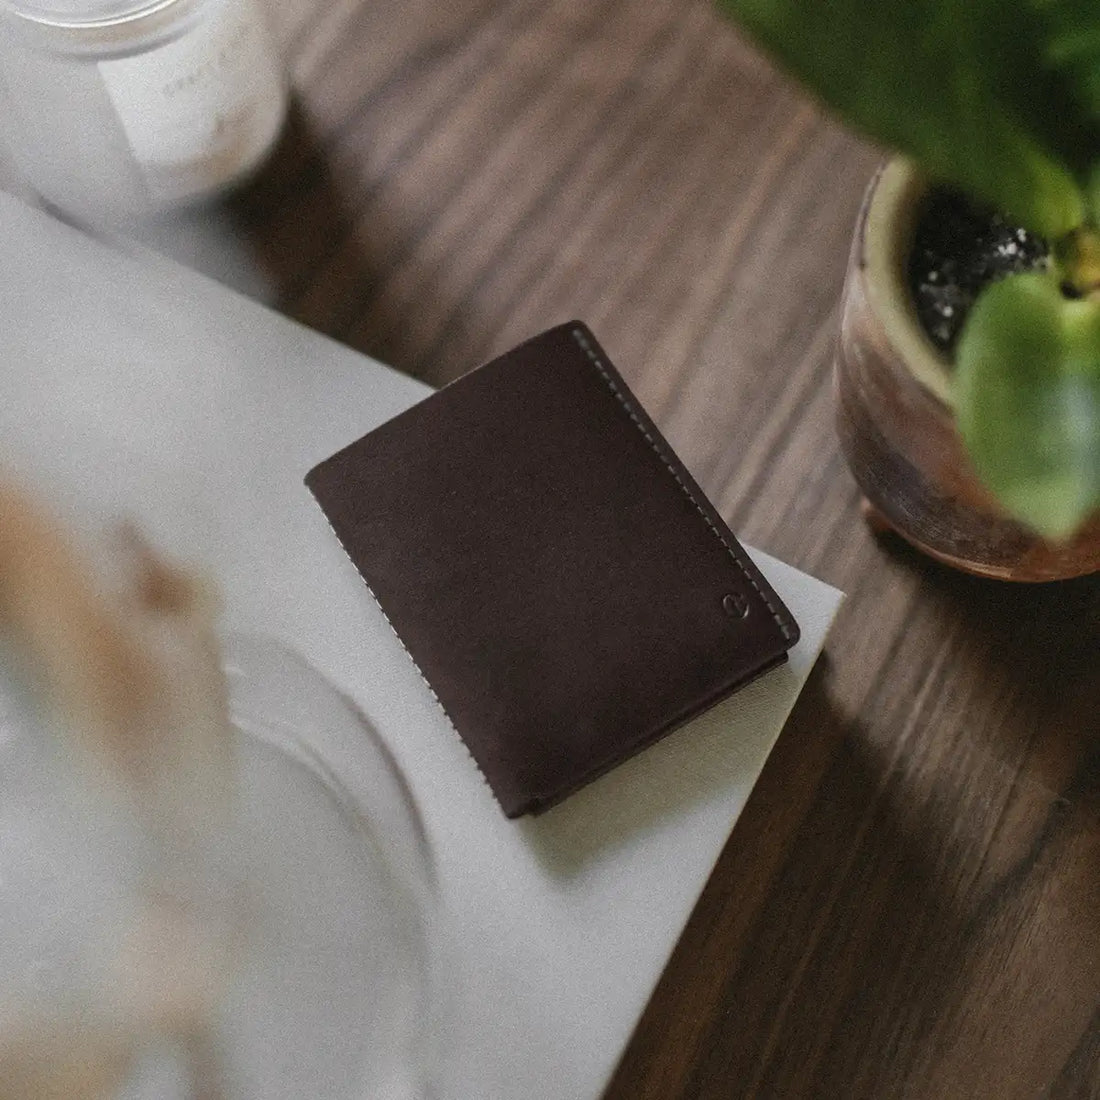 Ultra Slim Leather Wallet Jamaica - Black Coffee